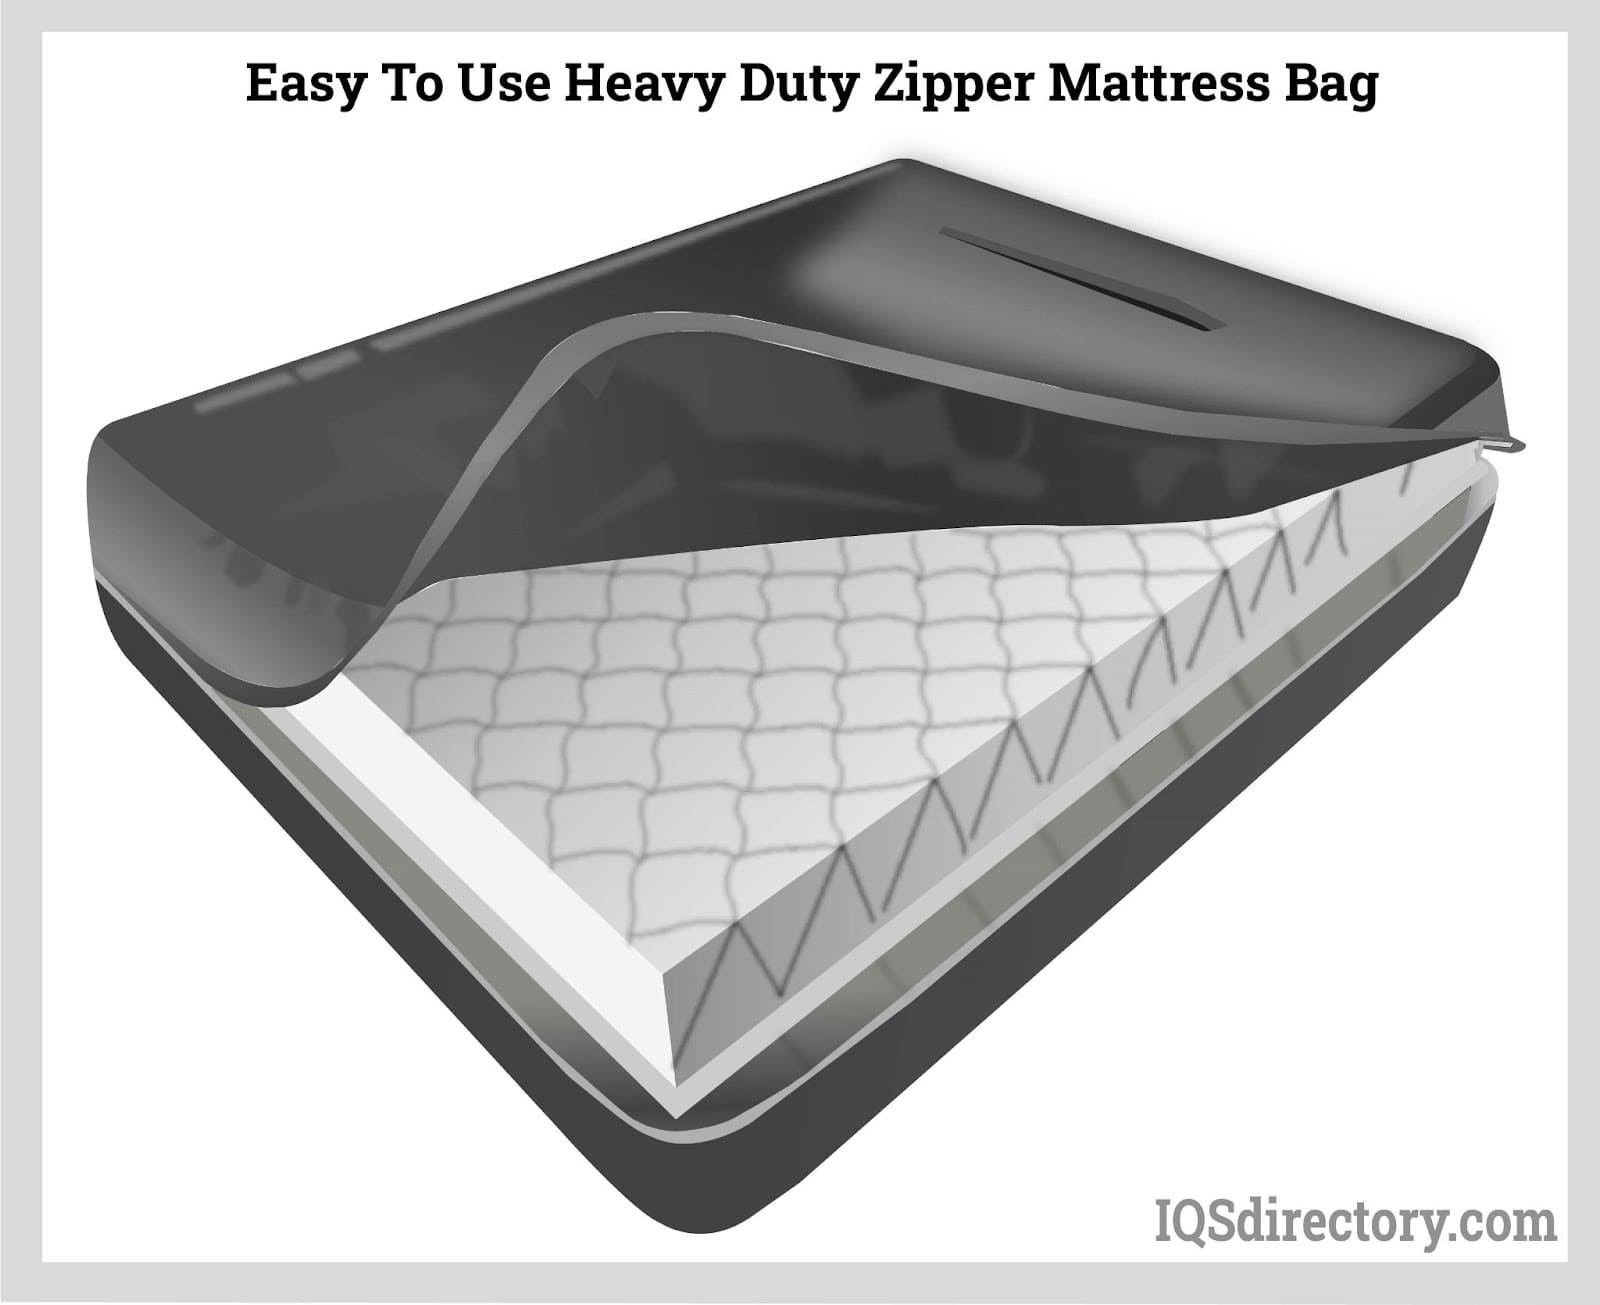 Easy to Use Heavy Duty Zipper Mattress Bag